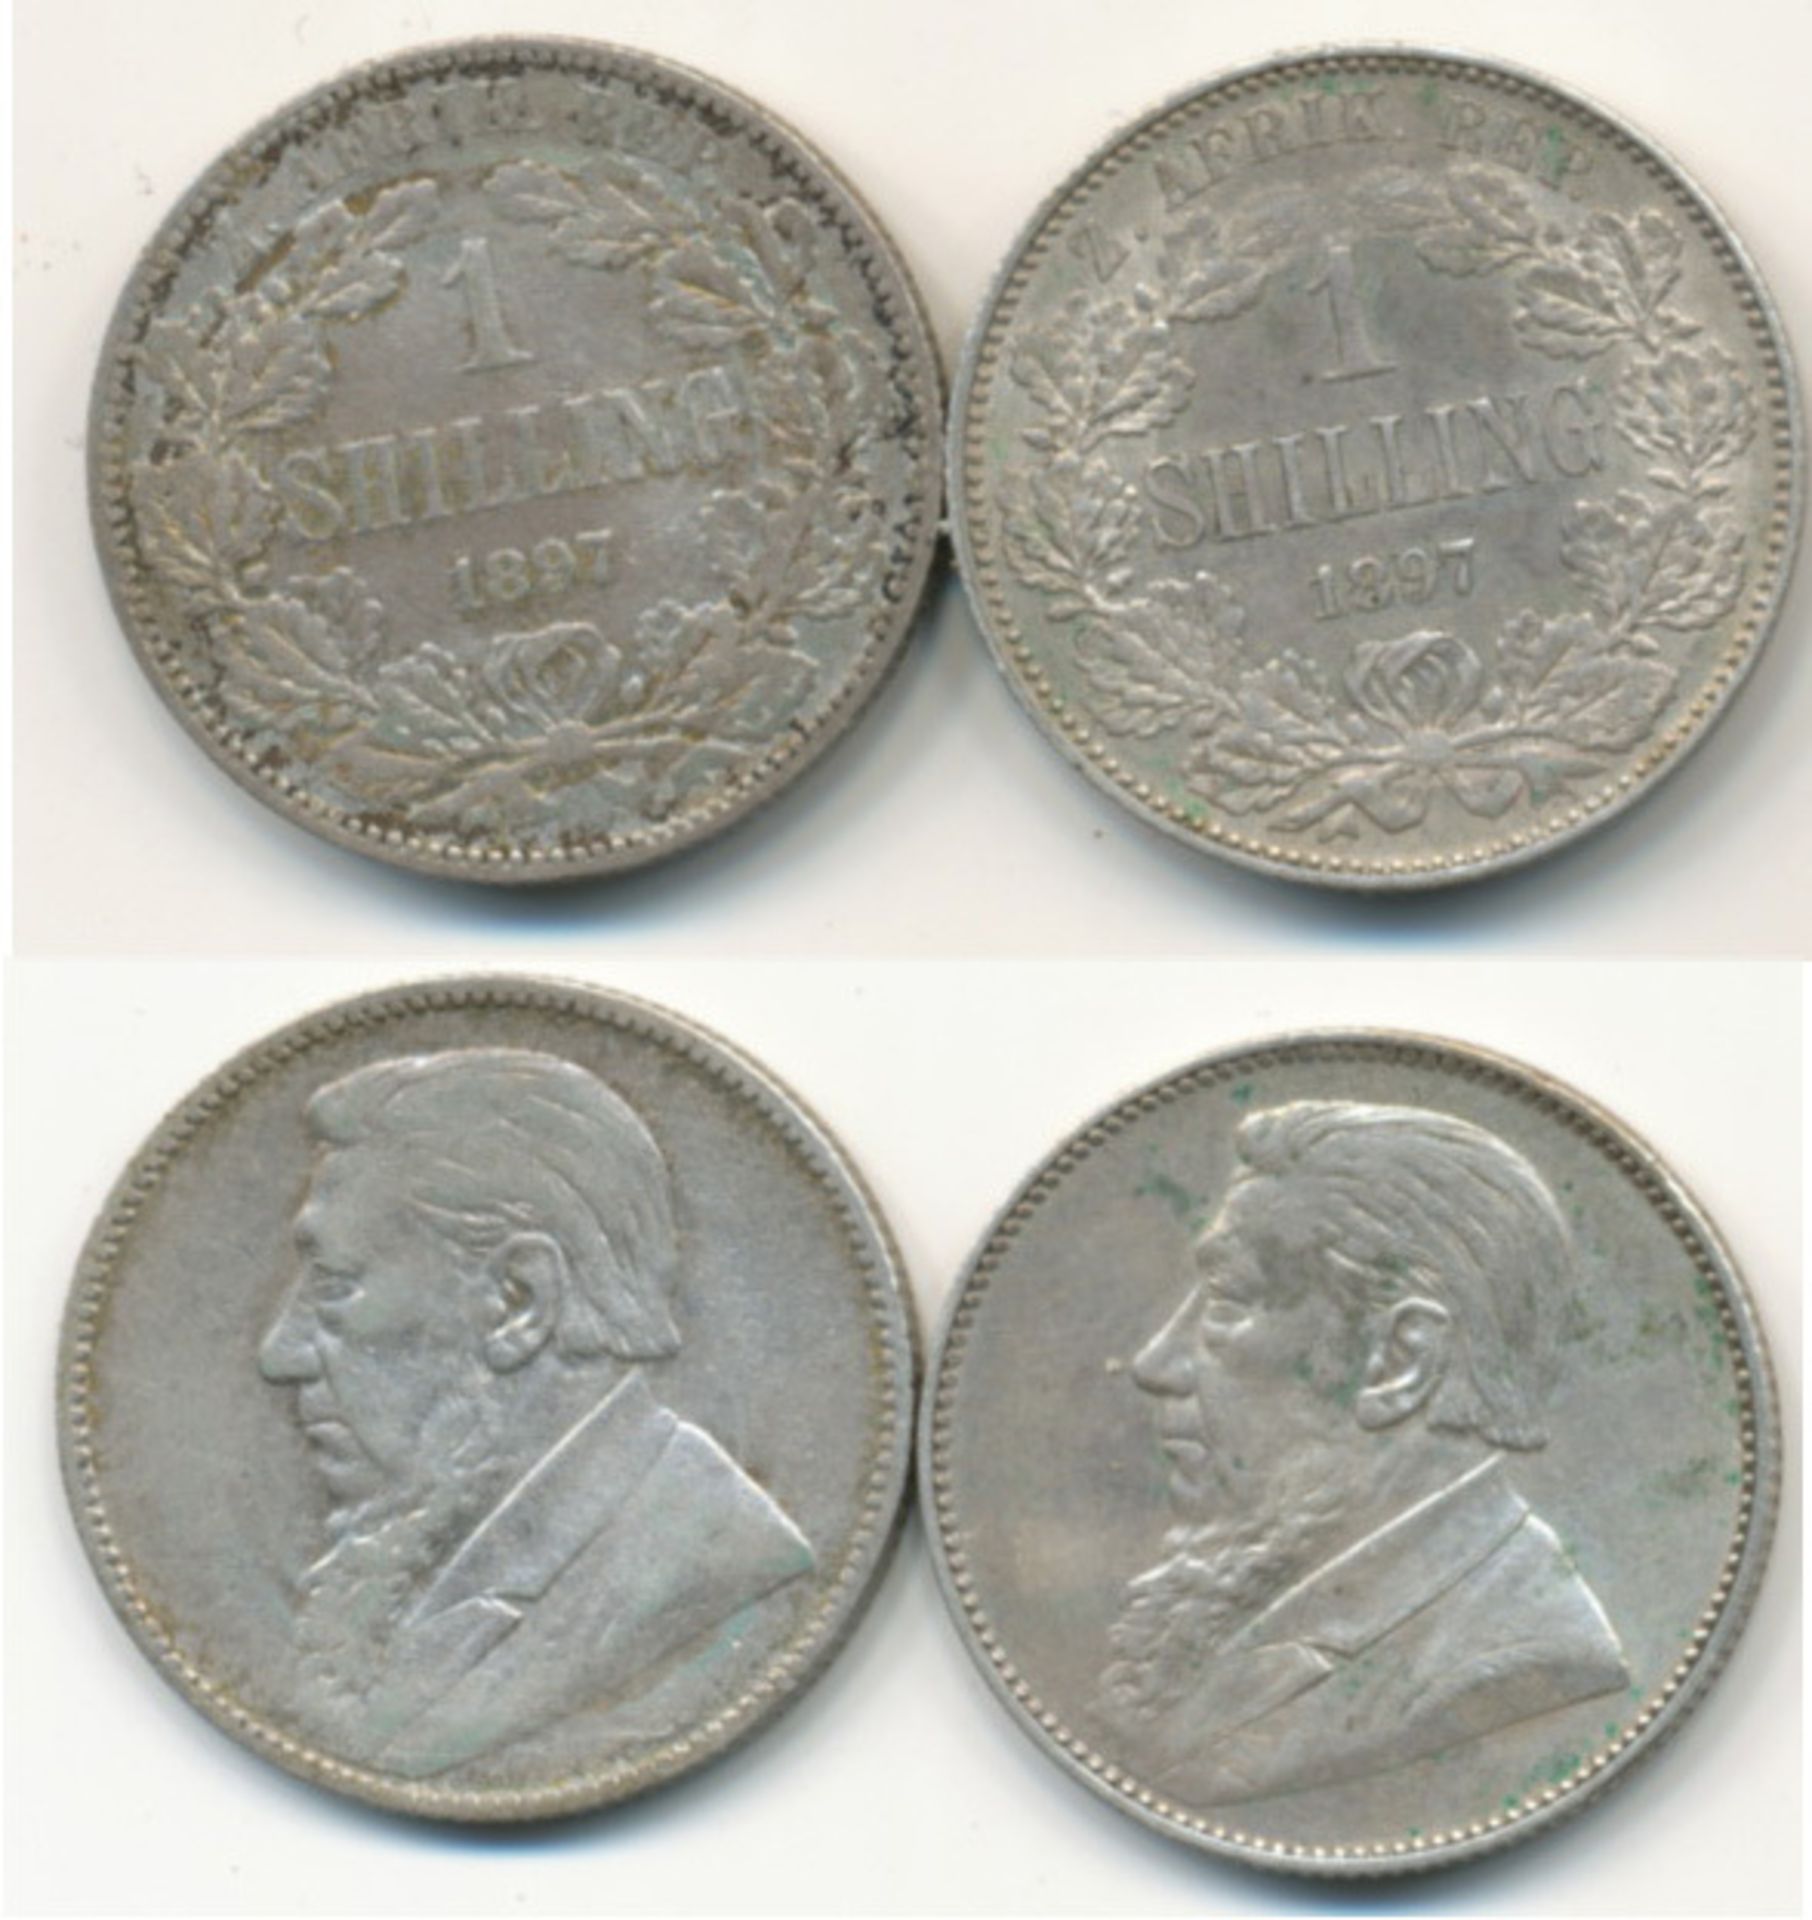 Südafrika 1 Shilling 1897, ss, 2 Stück- - -23.00 % buyer's premium on the hammer price19.00 % VAT on